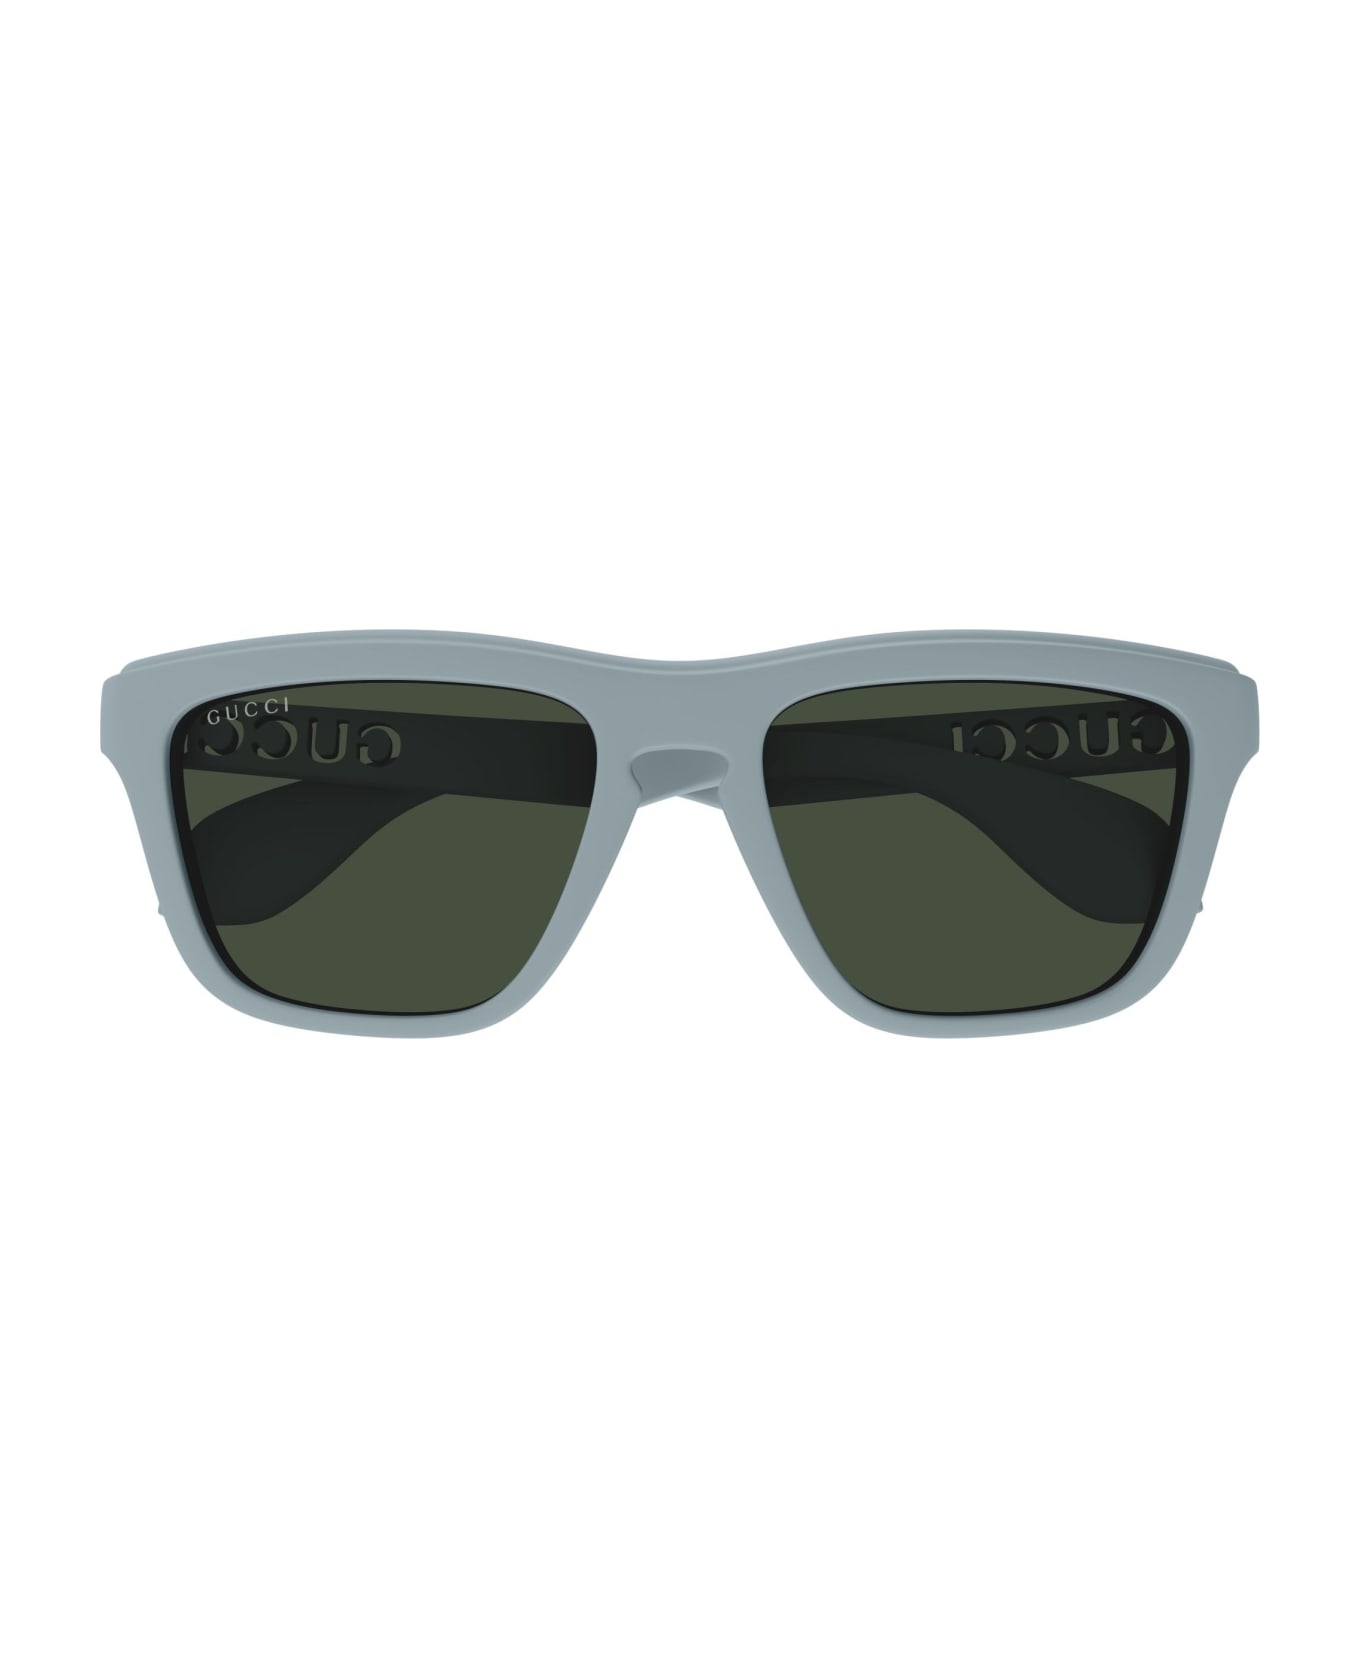 Gucci Eyewear Sunglasses - Azzurro/Blu chiaro サングラス